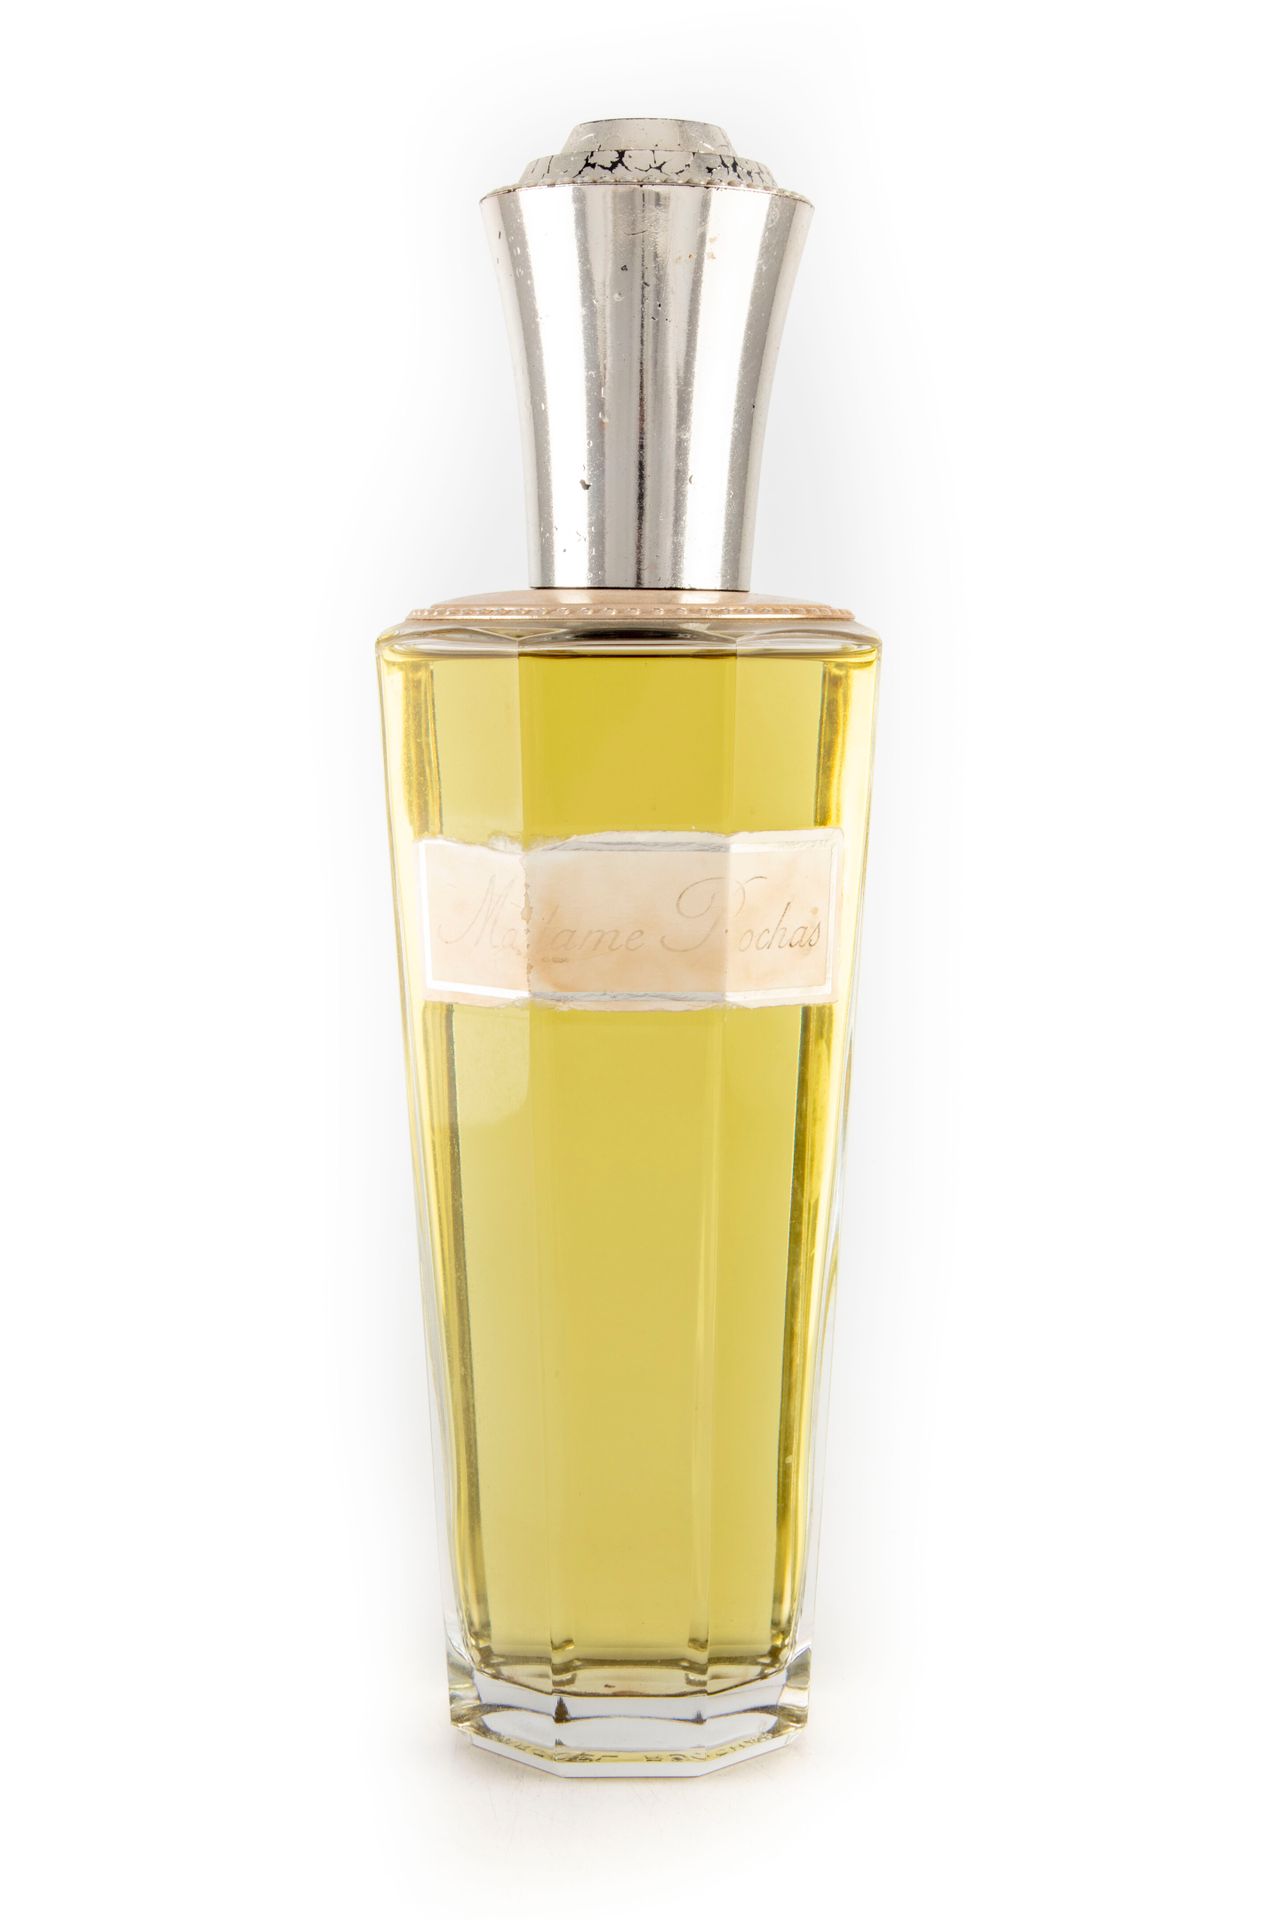 Null ROCHAS

Glass perfume bottle "Madame Rochas", dummy 

H. 27 cm